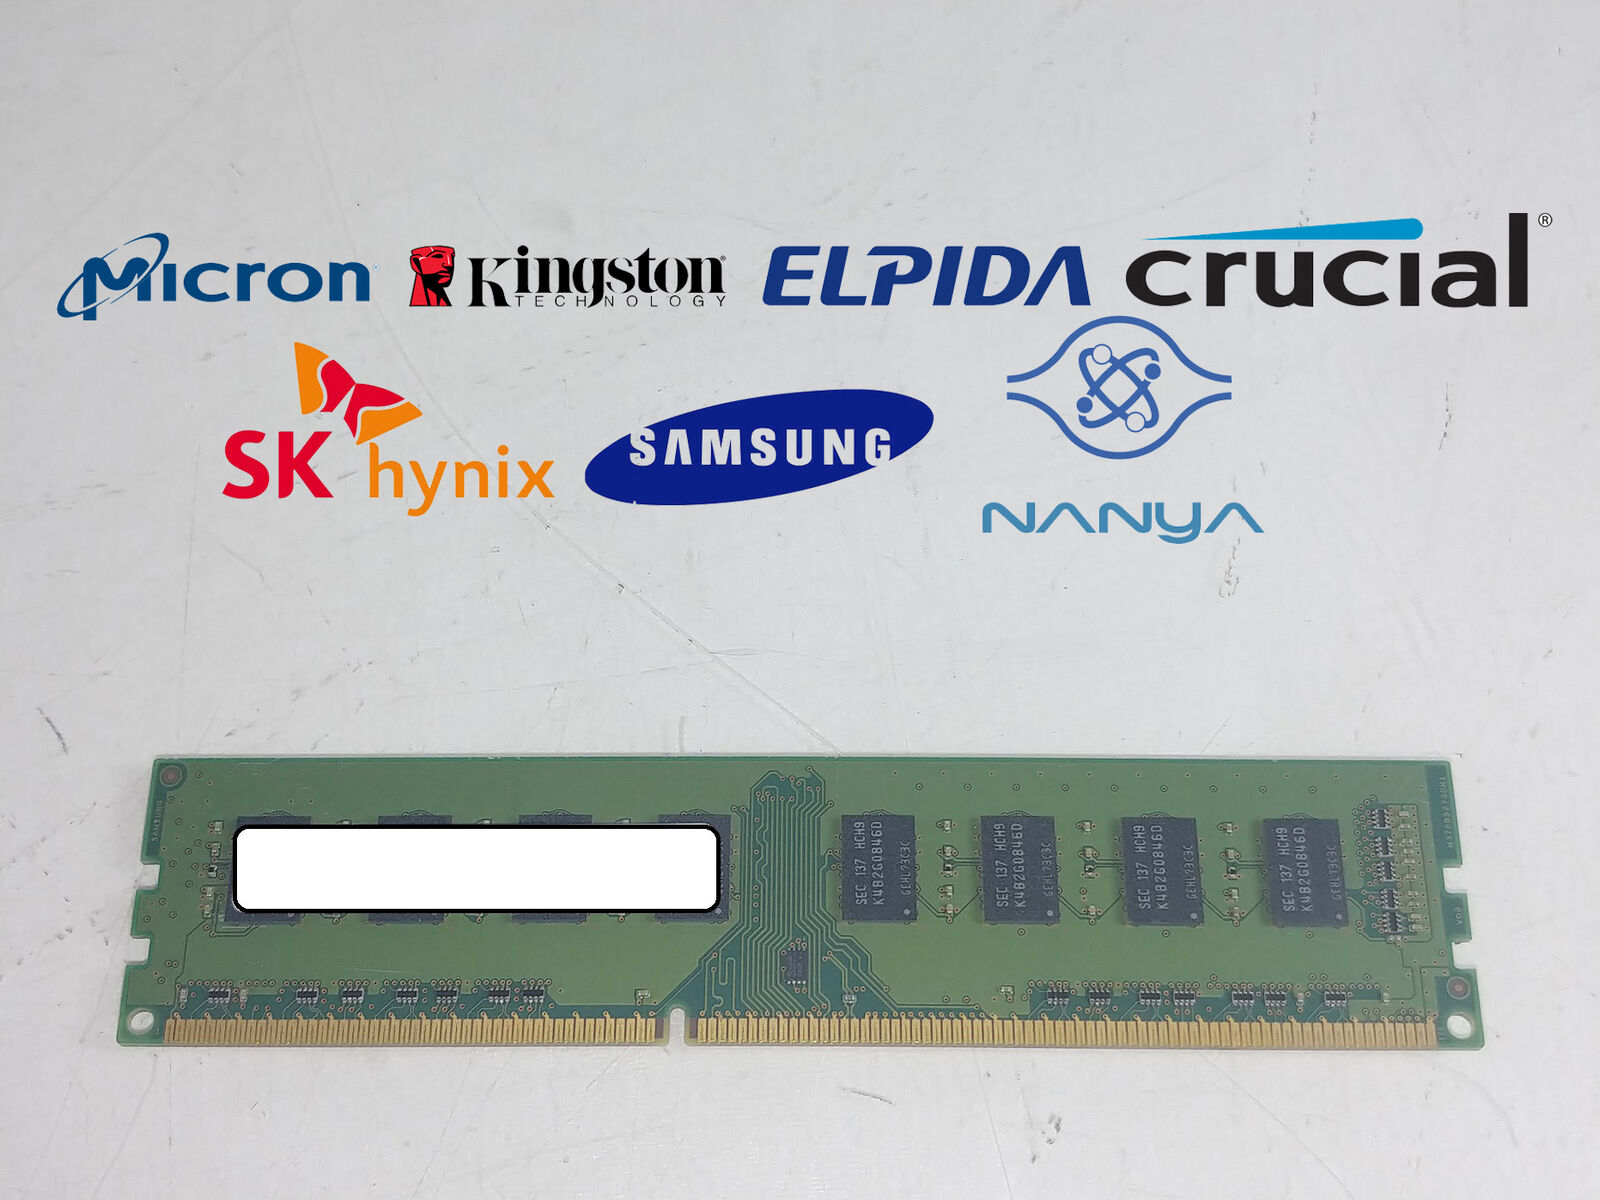 Lot of 10 Major Brand 4 GB PC3-10600 (DDR3-1333) 2Rx8 DDR3 Desktop Memory